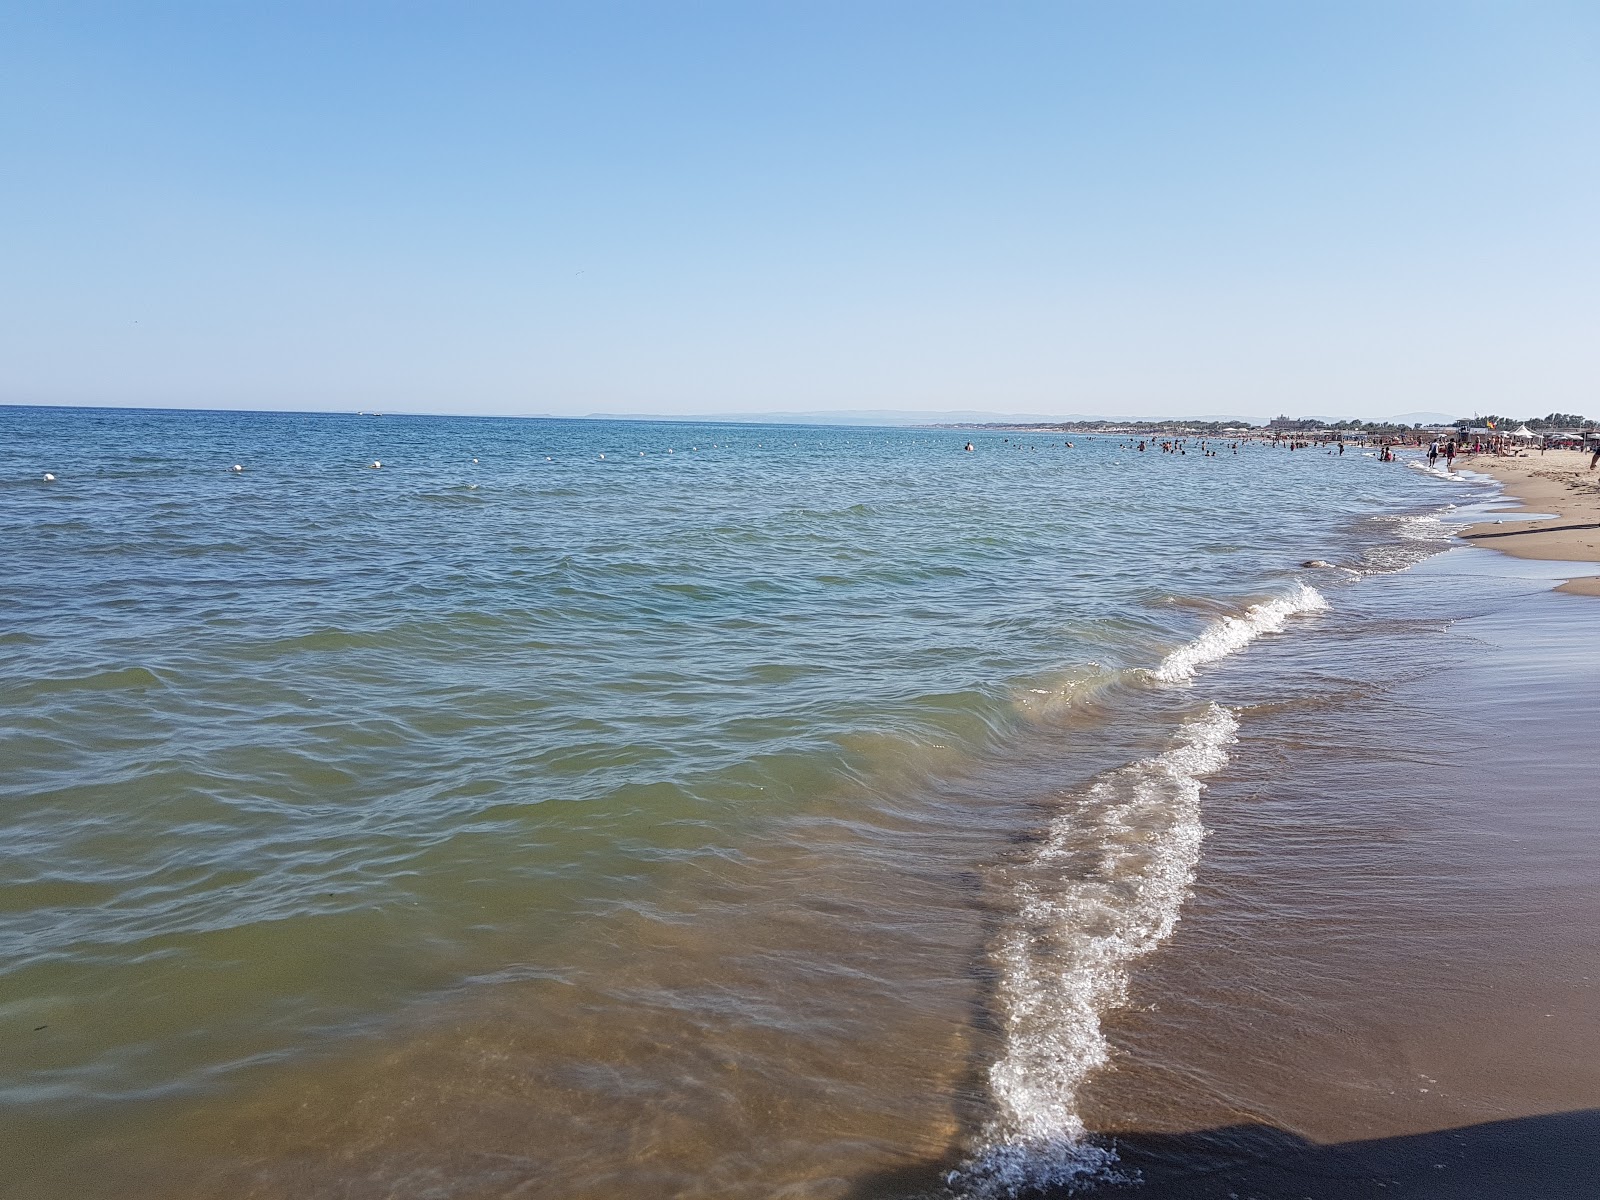 Foto von Spiaggia Di Catania mit langer gerader strand